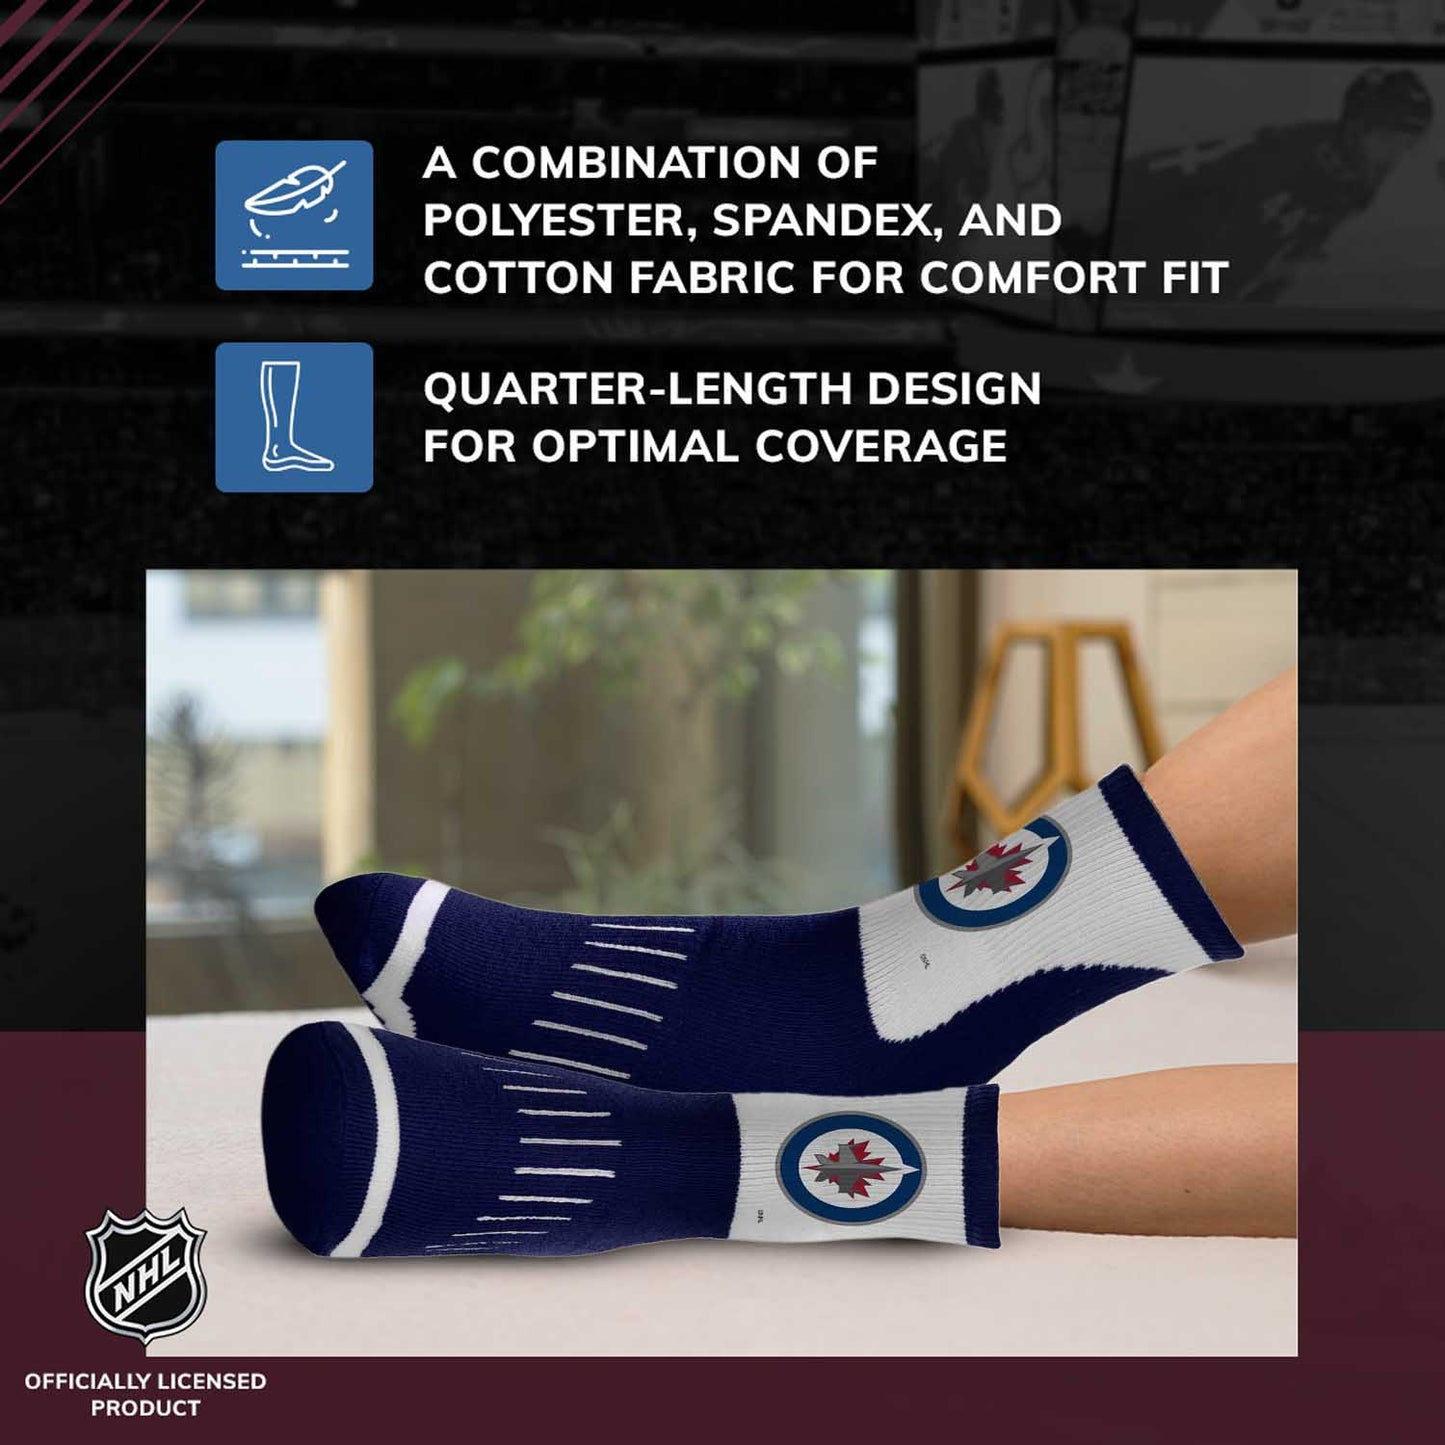 Winnipeg Jets NHL Adult Surge Team Mascot Mens and Womens Quarter Socks - Navy